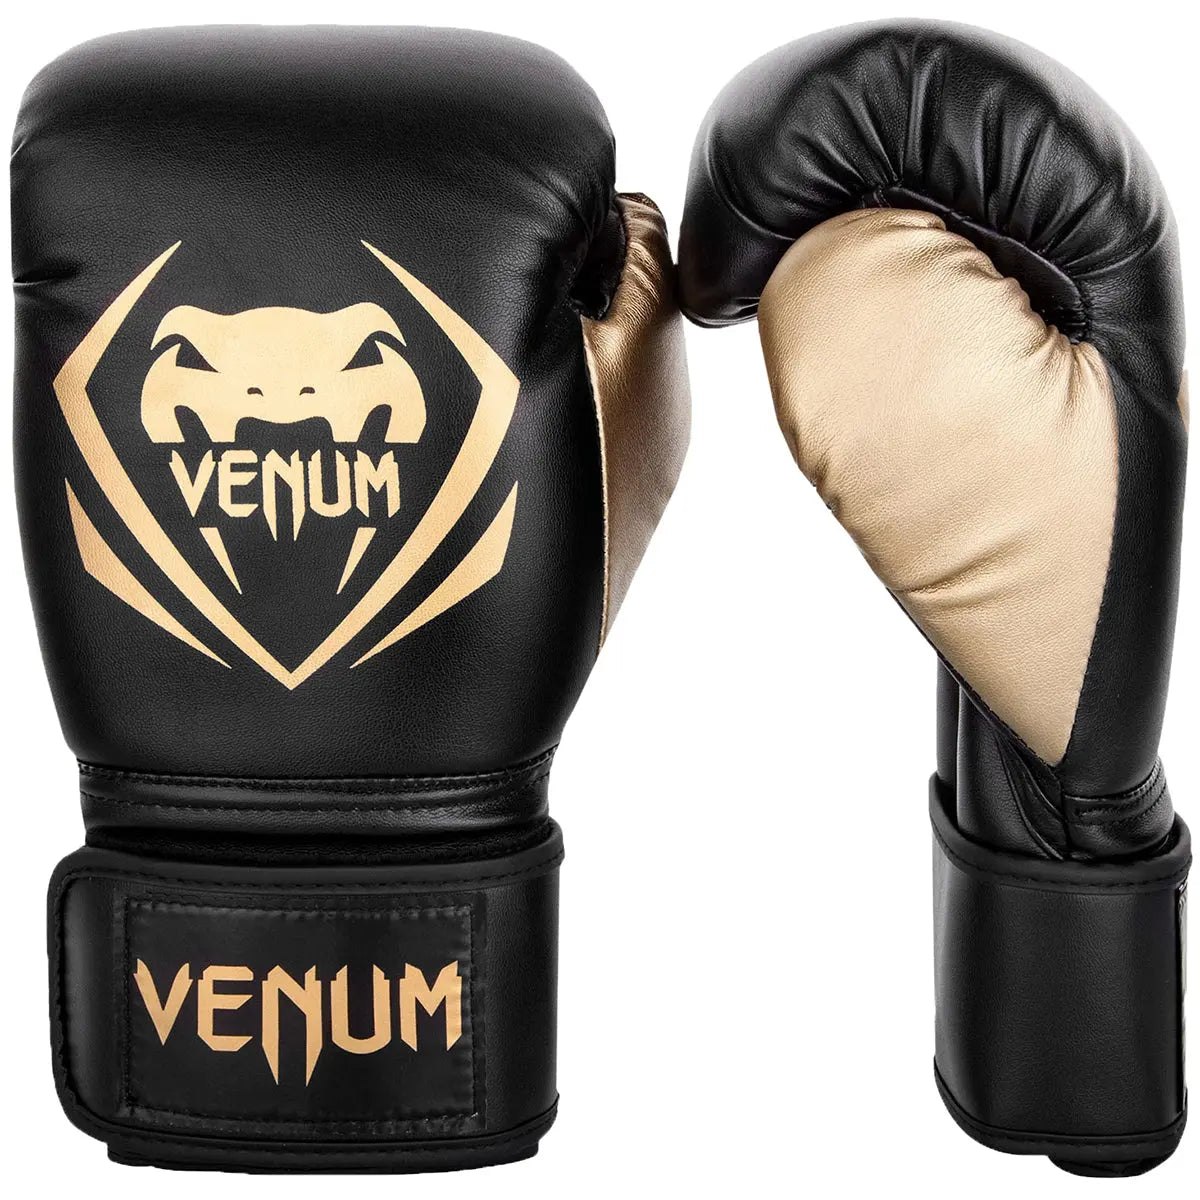 Venum Contender Hook and Loop Training Boxing Gloves - Black/Gold